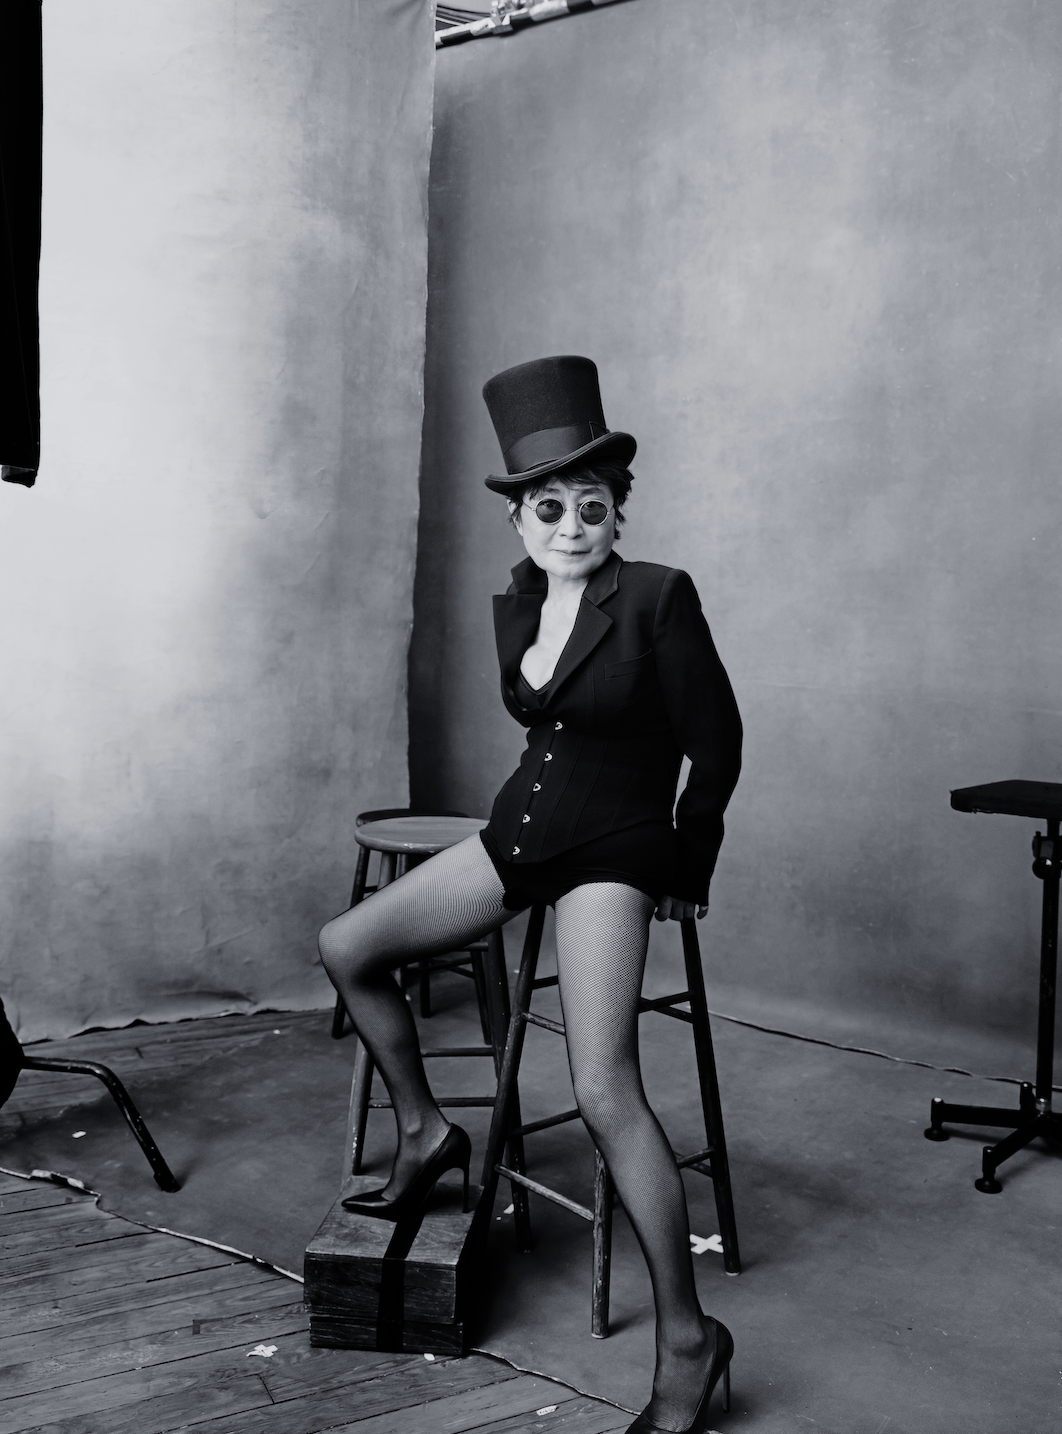 Yoko Ono por ANNIE LEIBOVITZ en el Calendario Pirelli 2016, © Annie Leibovitz, 2015